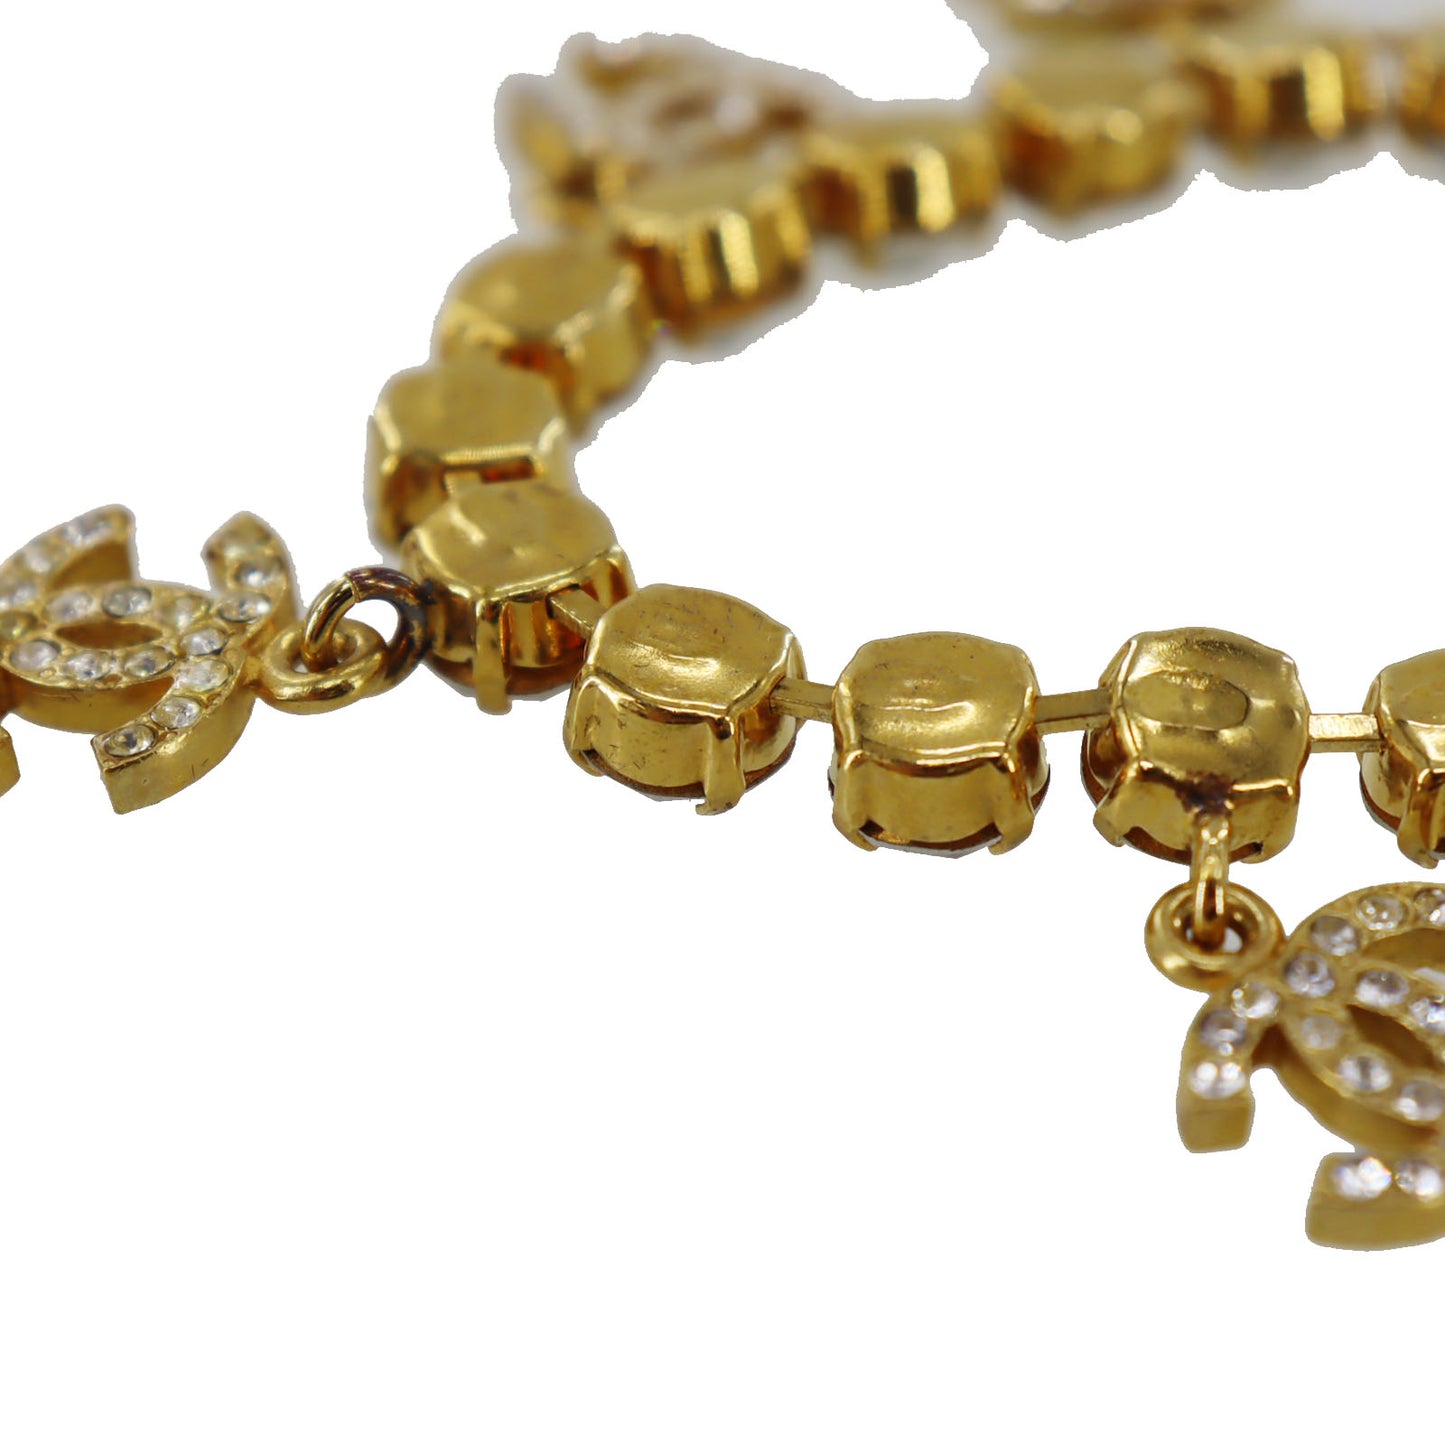 CHANEL CC Logos Rhinestone Bracelet Gold Plated 96 P #CS460